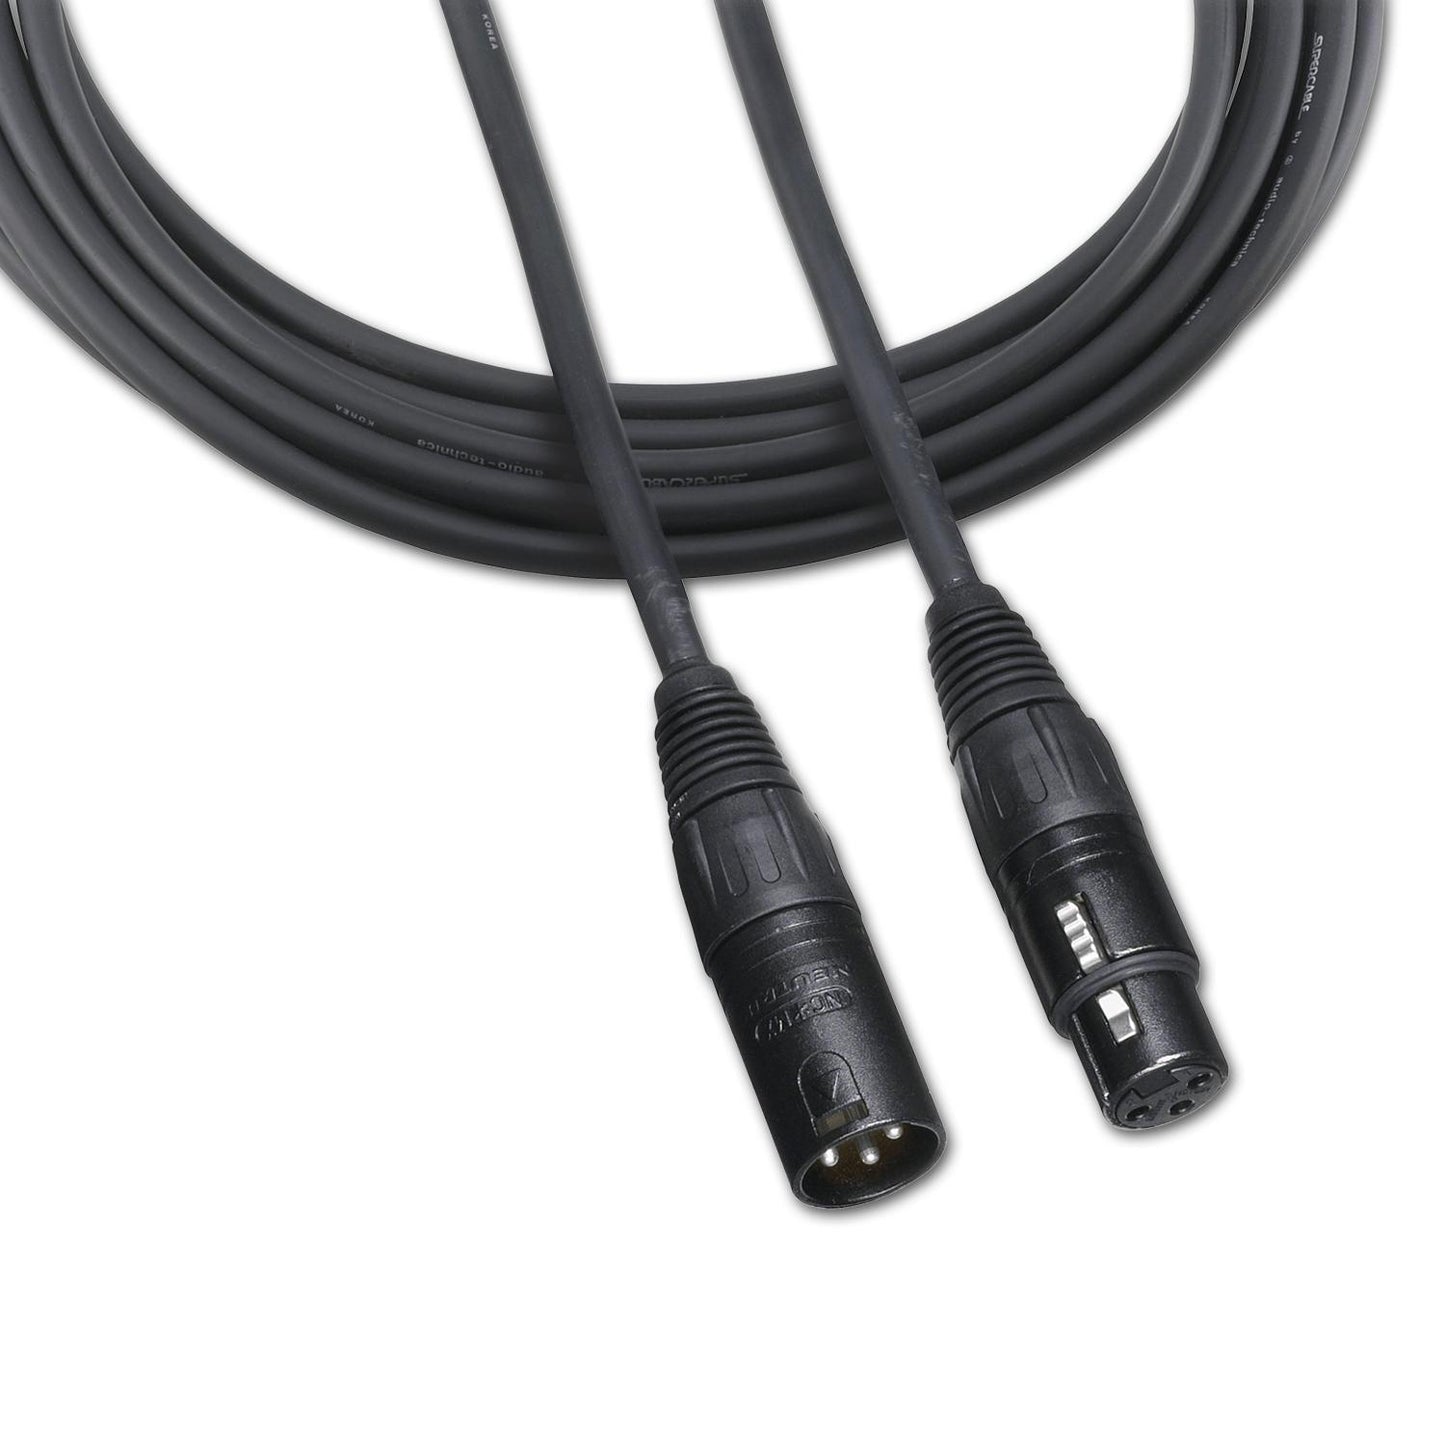 Cable de Micrófono Premium de 1.8m AT8314-6 AUDIO TECHNICA